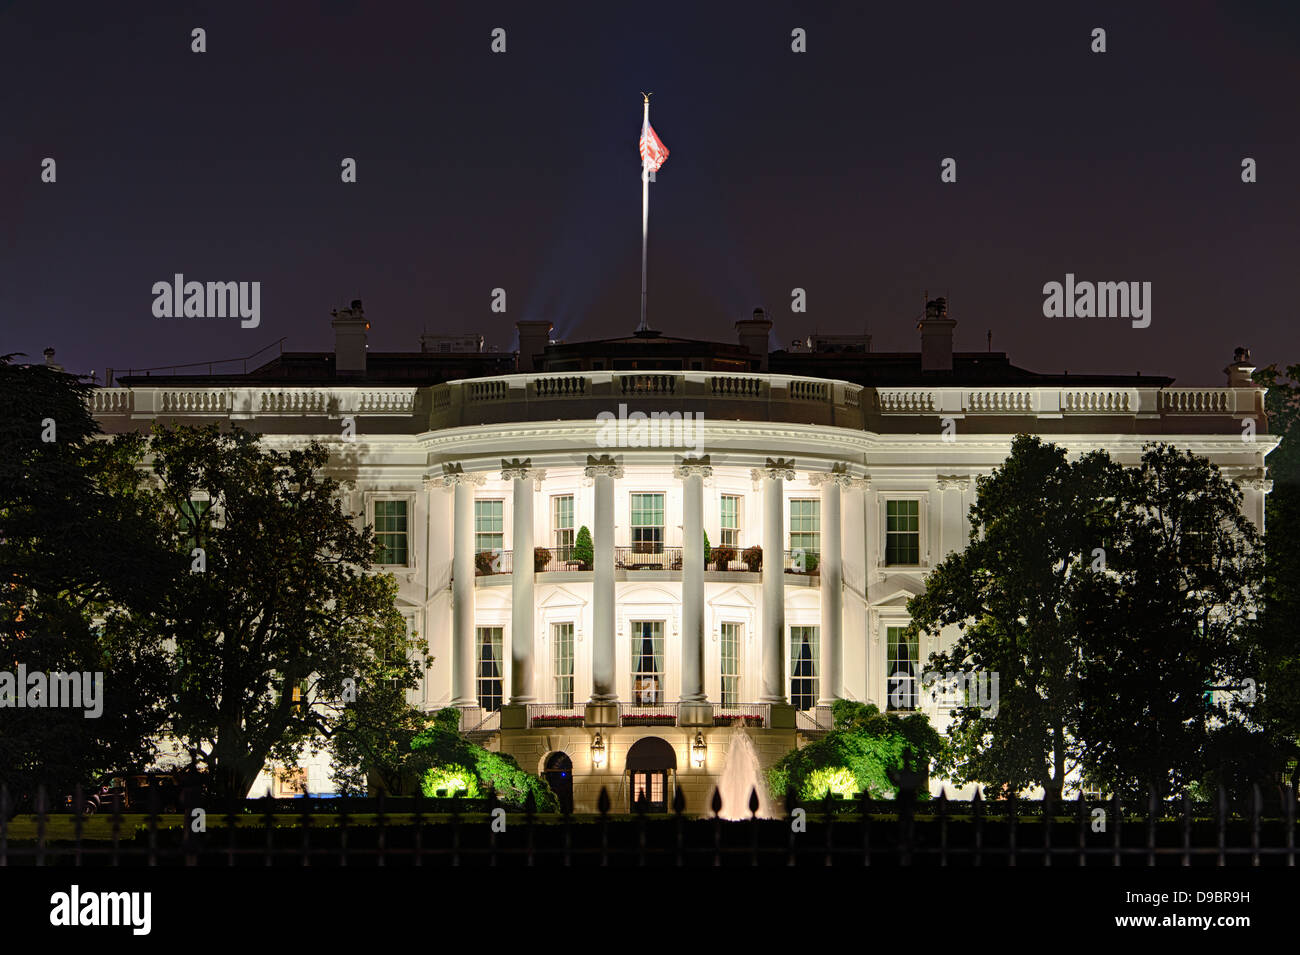 The White House, home of the United States President, Washington D.C., USA Stock Photo